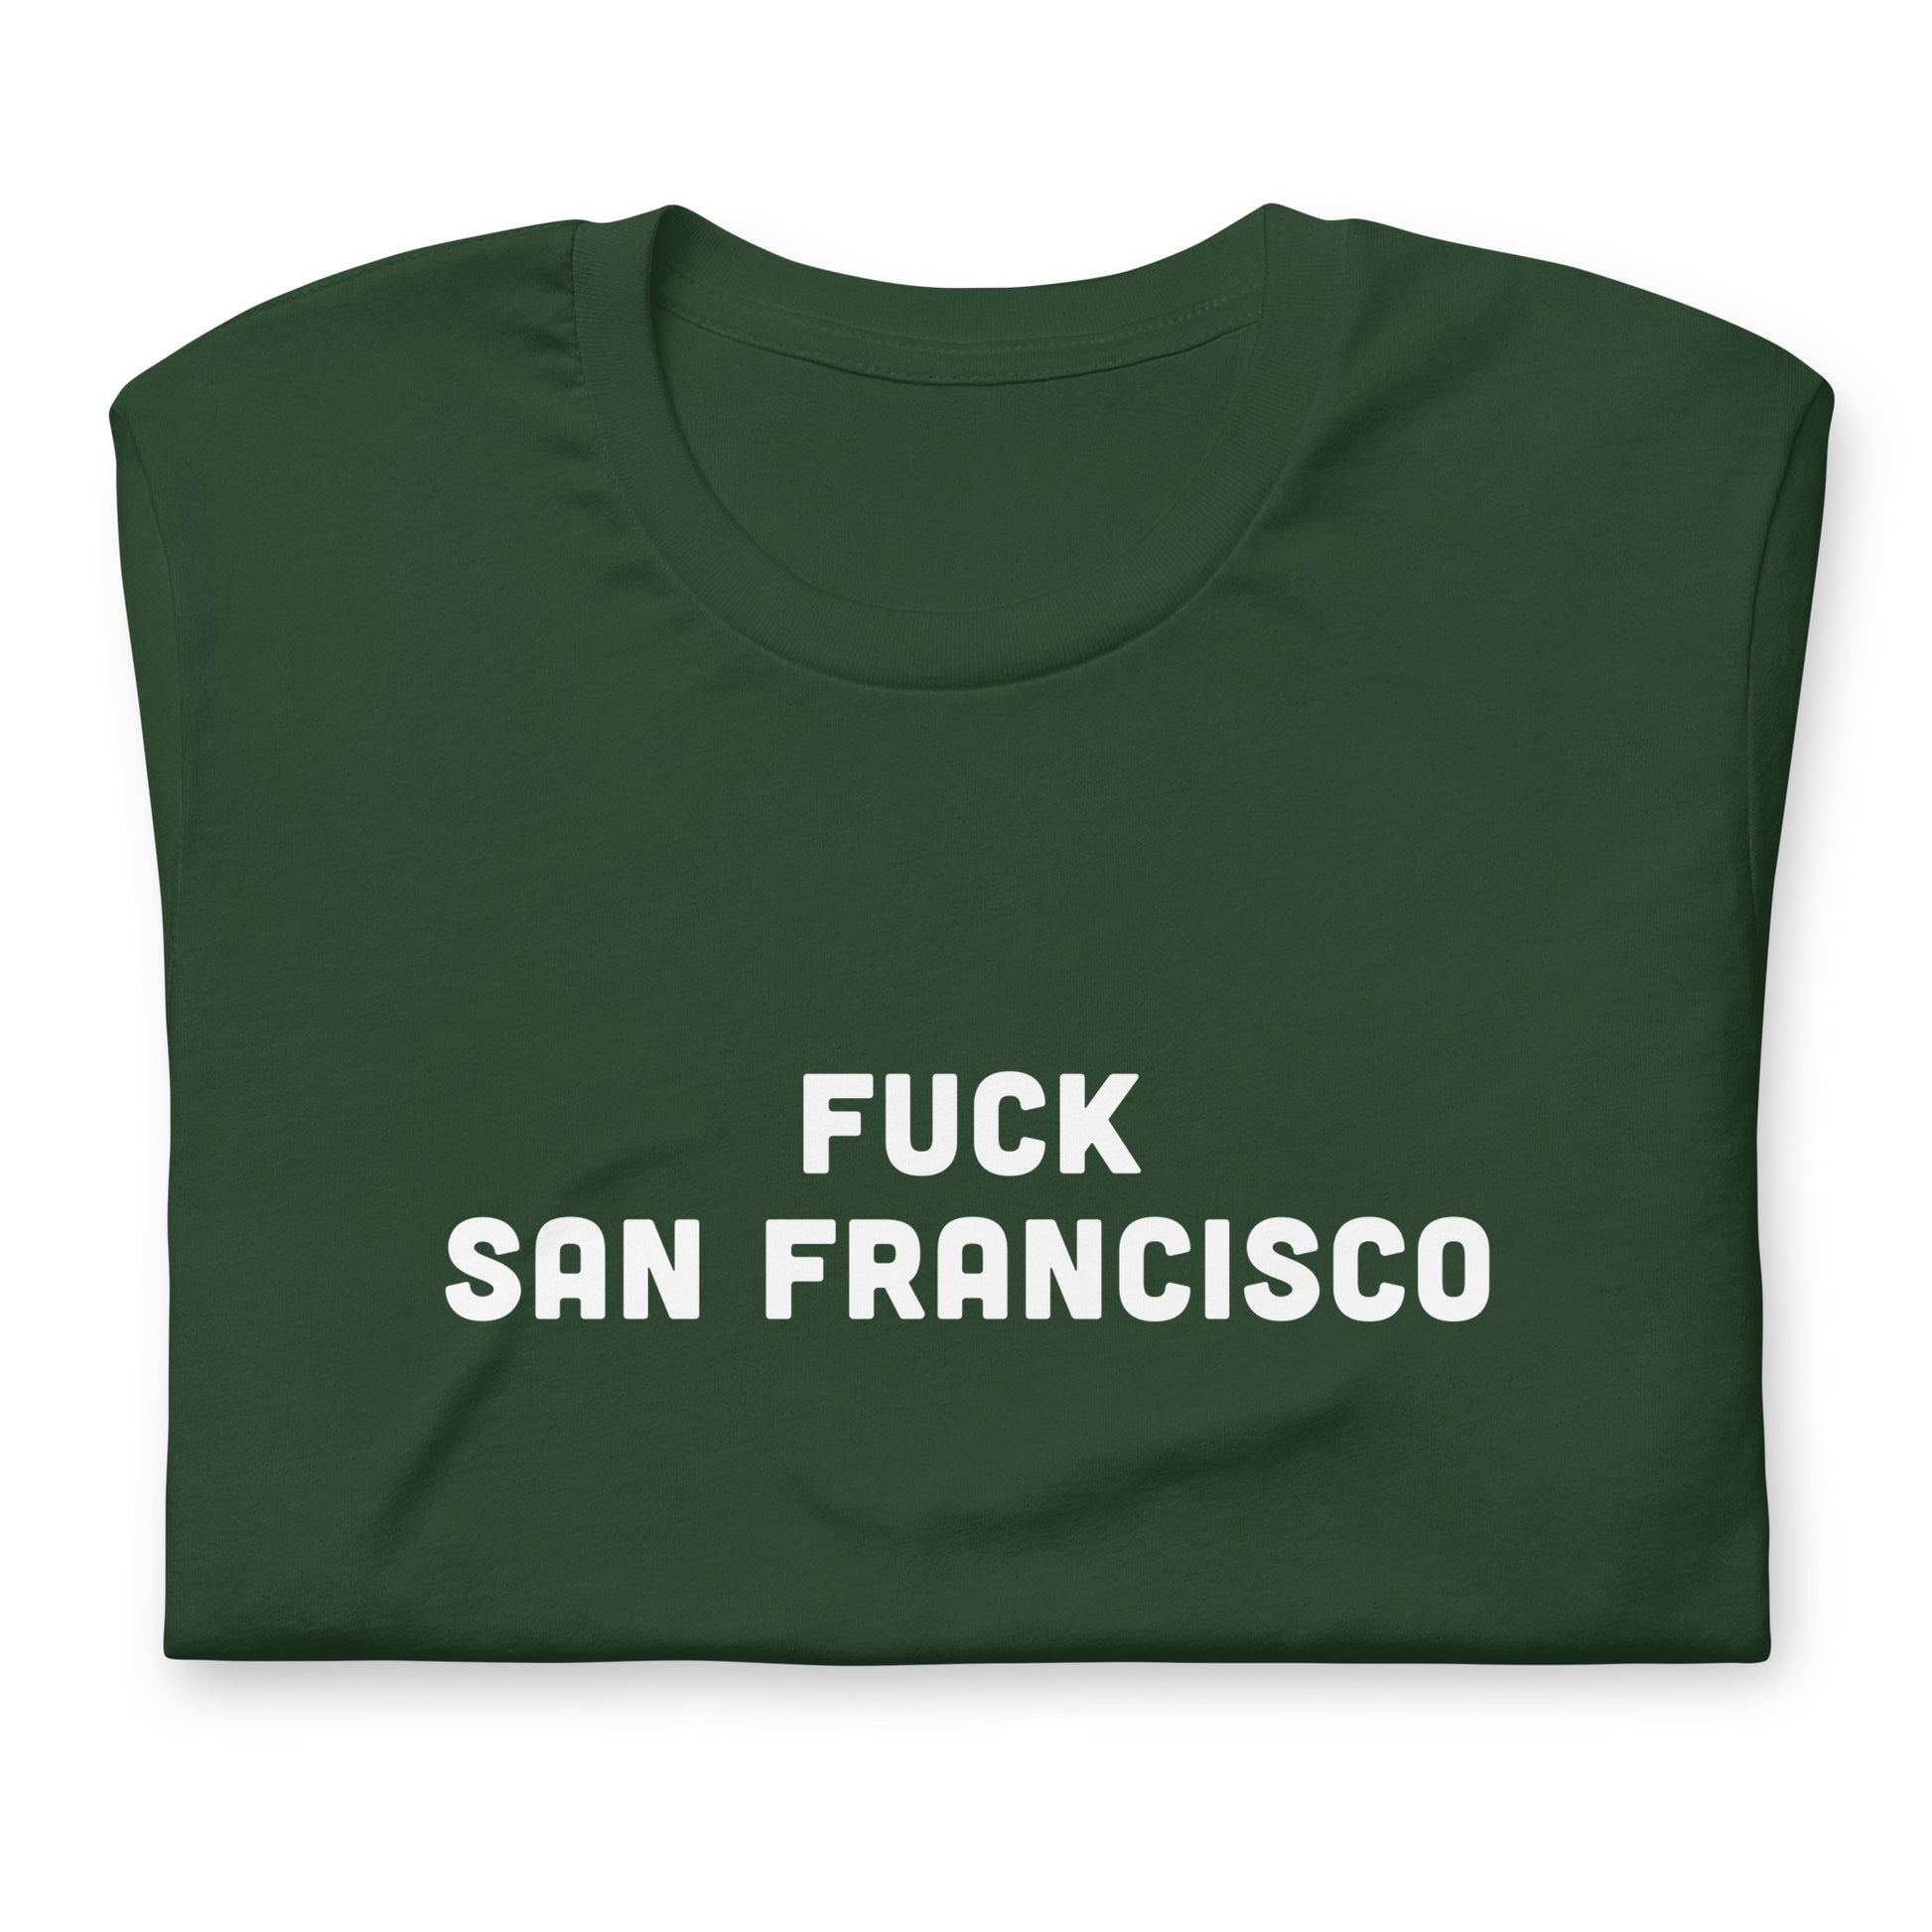 Fuck San Francisco T-Shirt Size XL Color Black